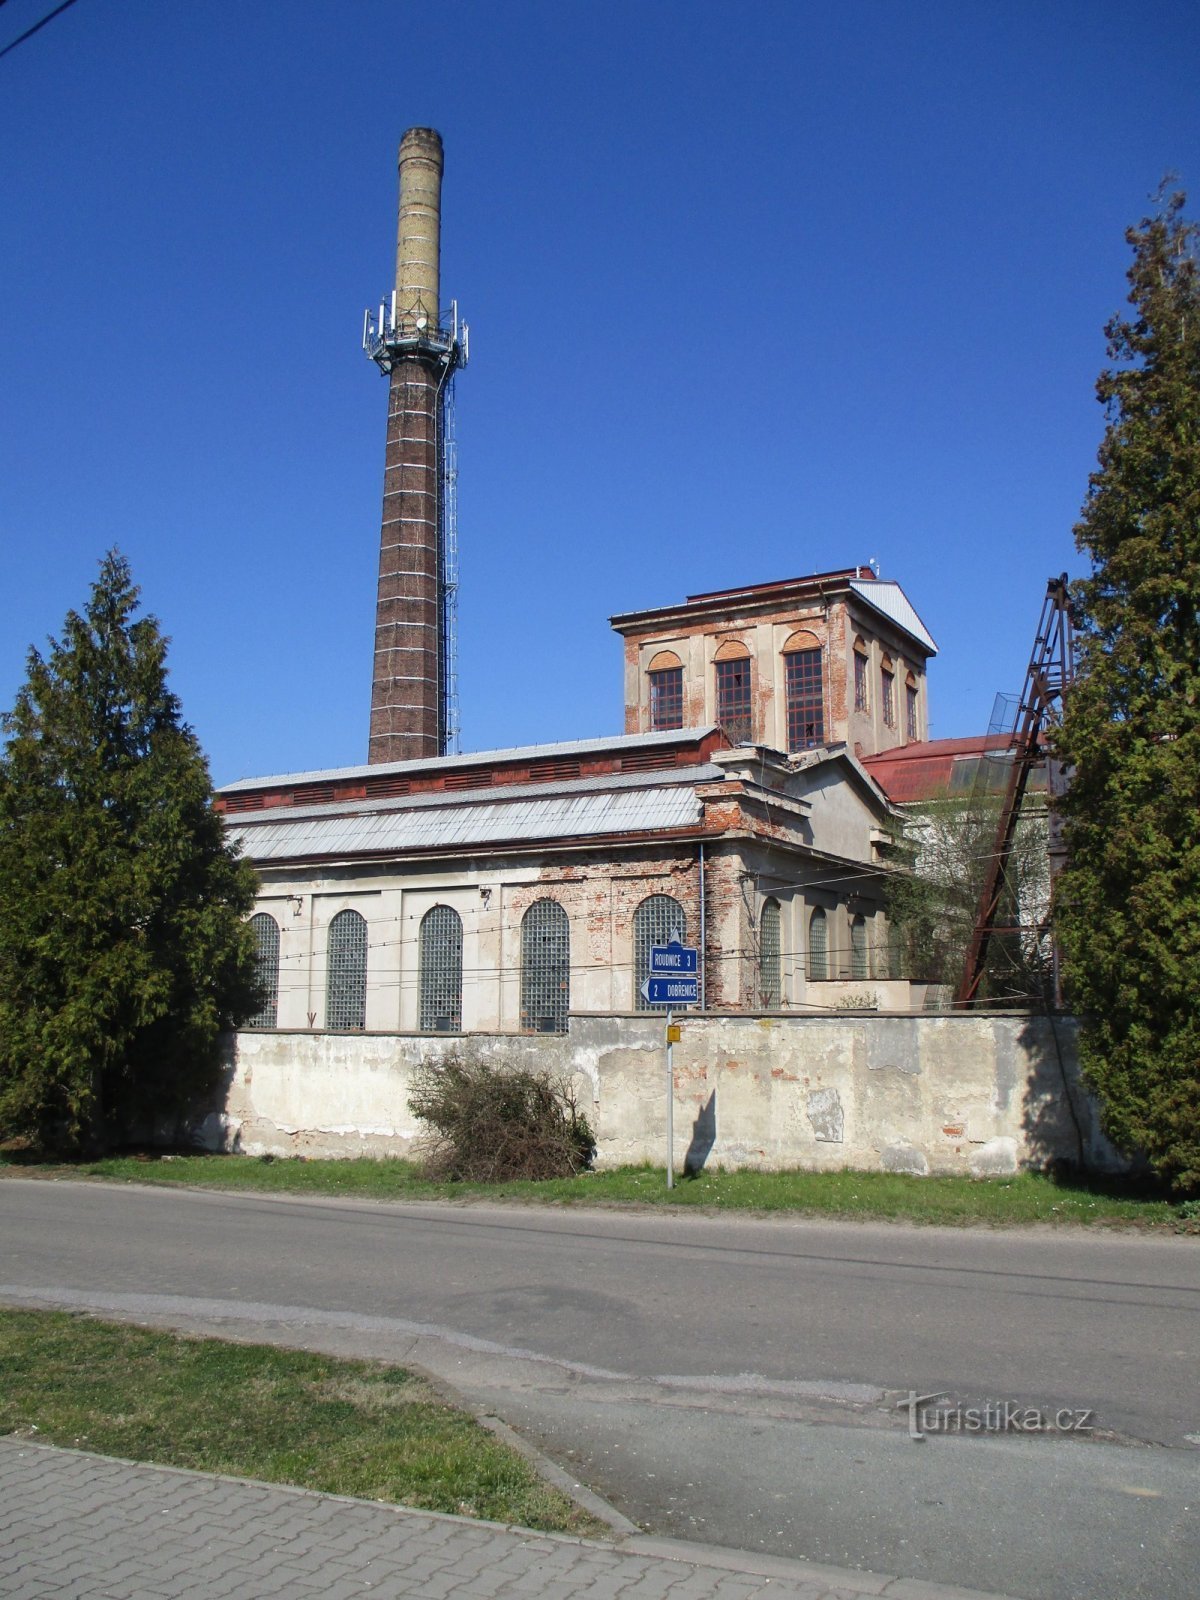 Tidligere sukkerfabrik (Syrovátka, 7.4.2020/XNUMX/XNUMX)